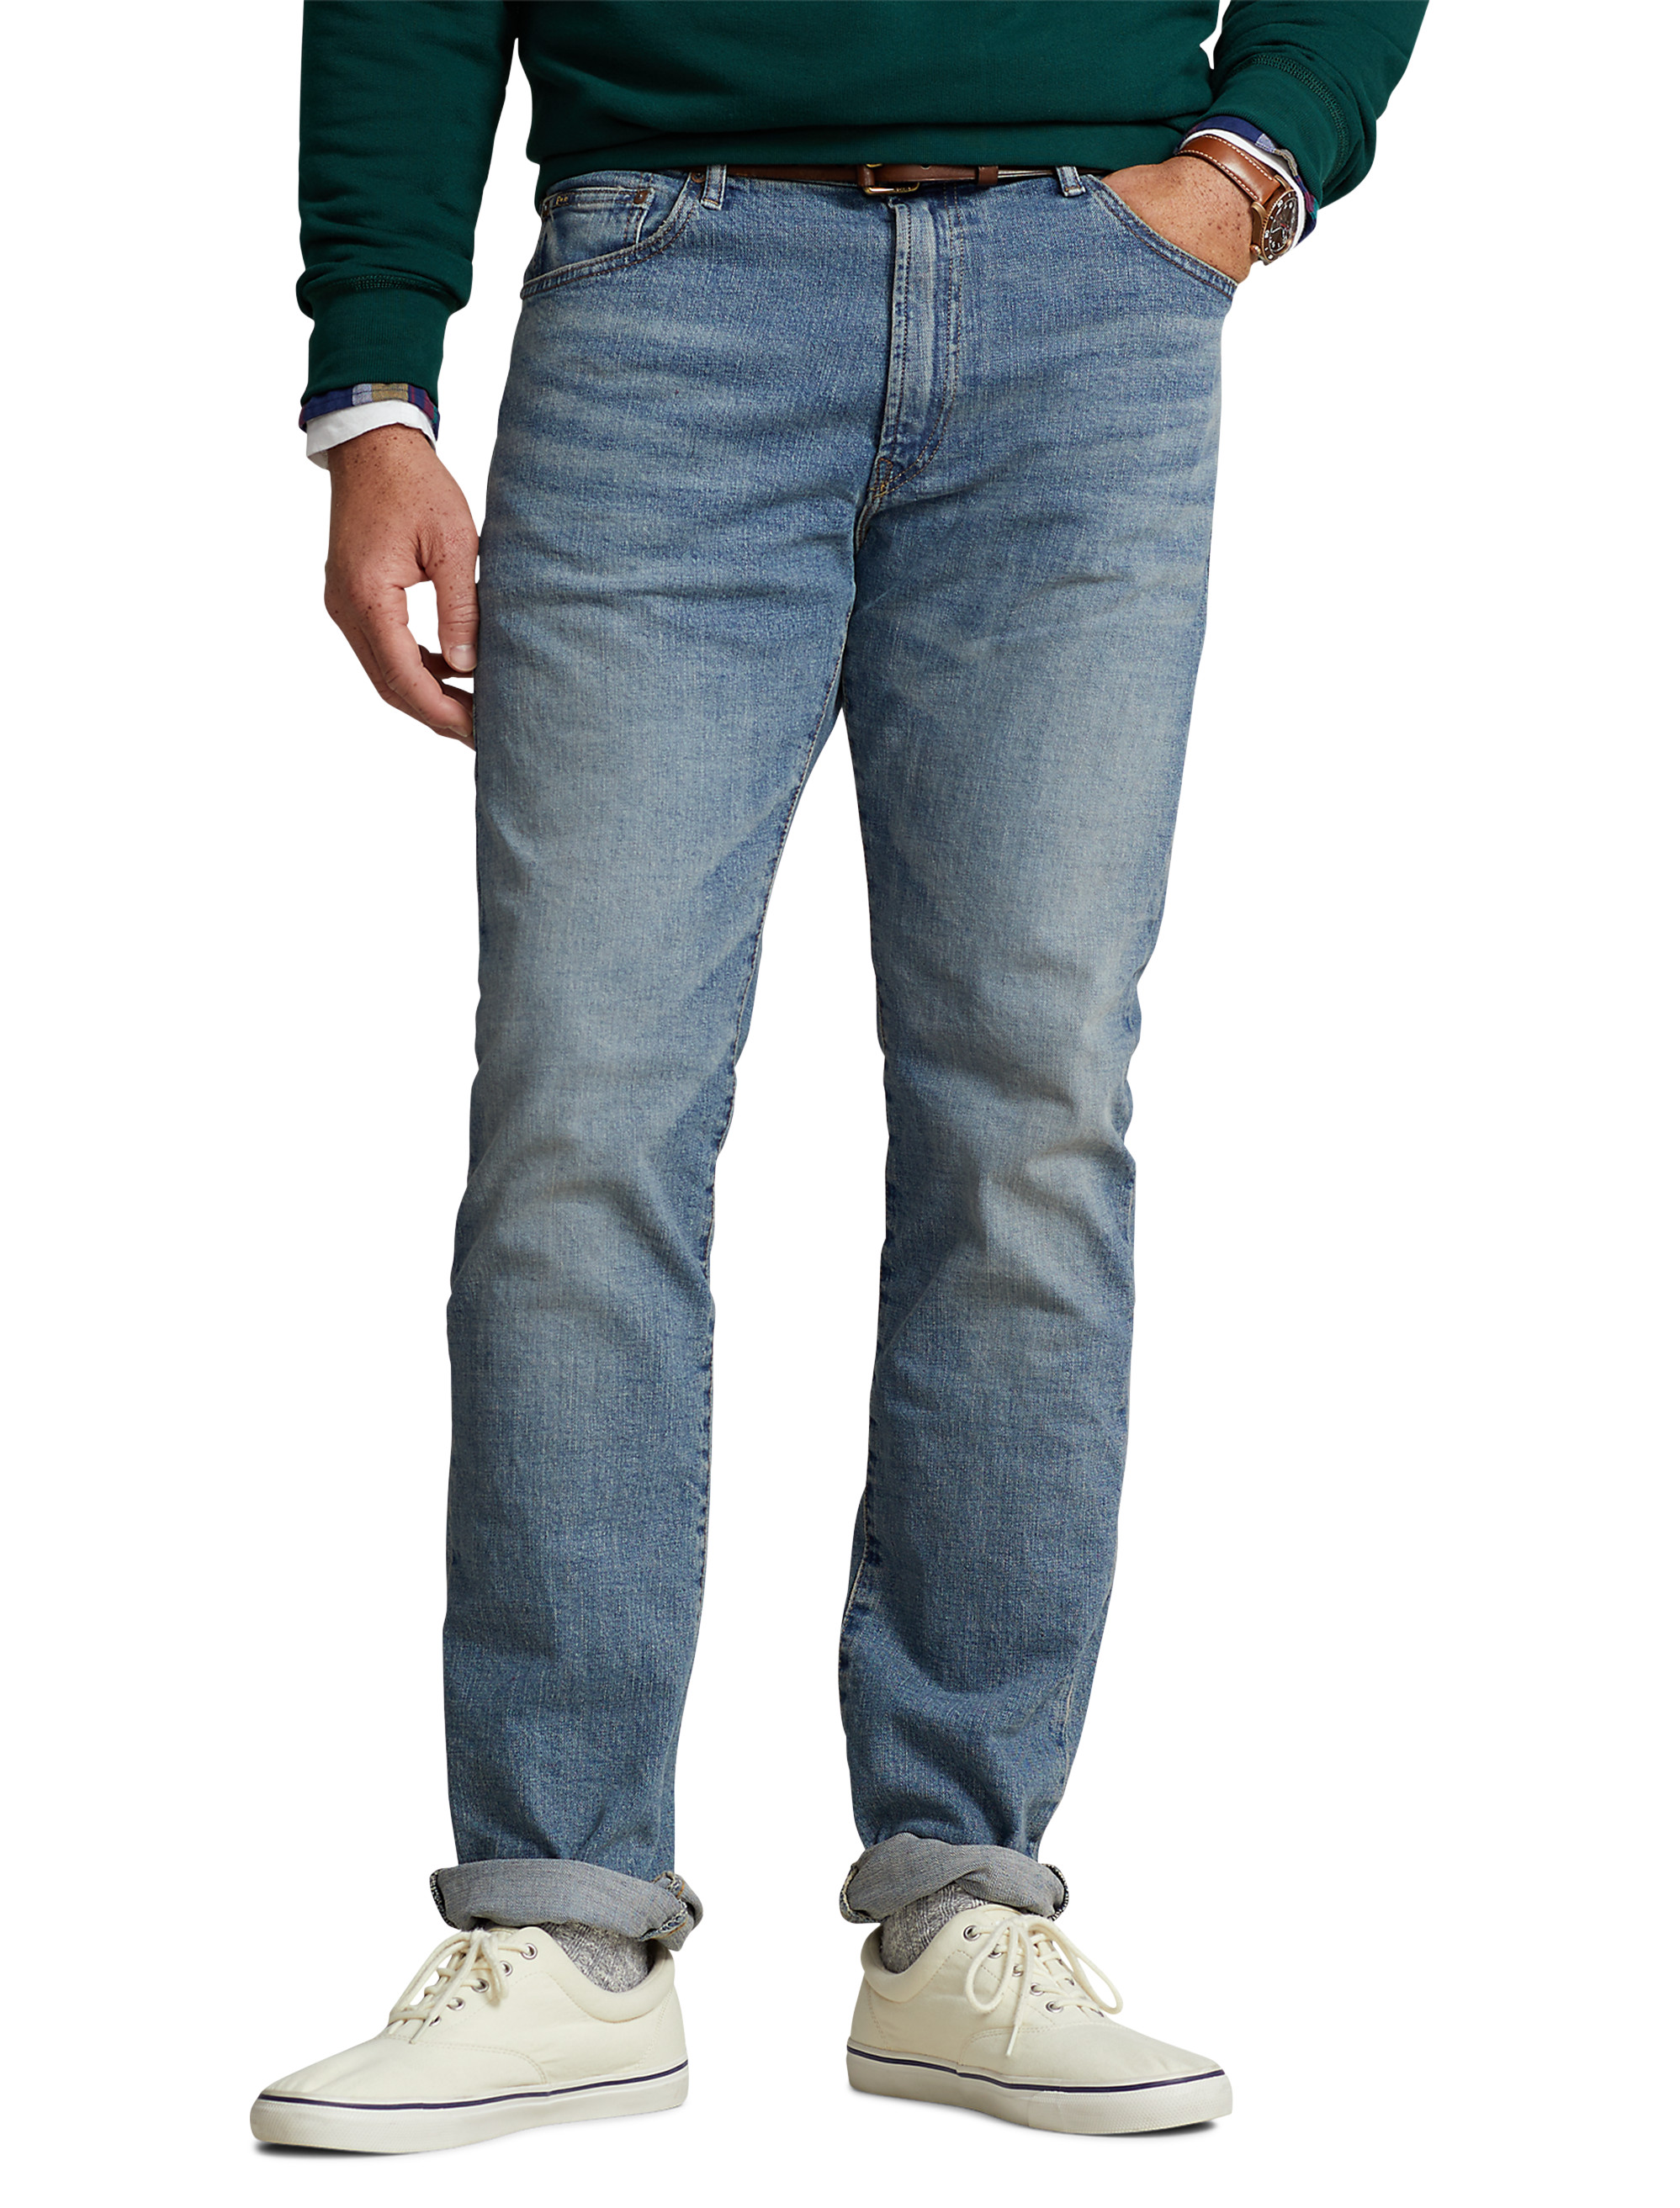 Nautica Jeans Company Big E-Z Jeans Mens Size 40 X 34